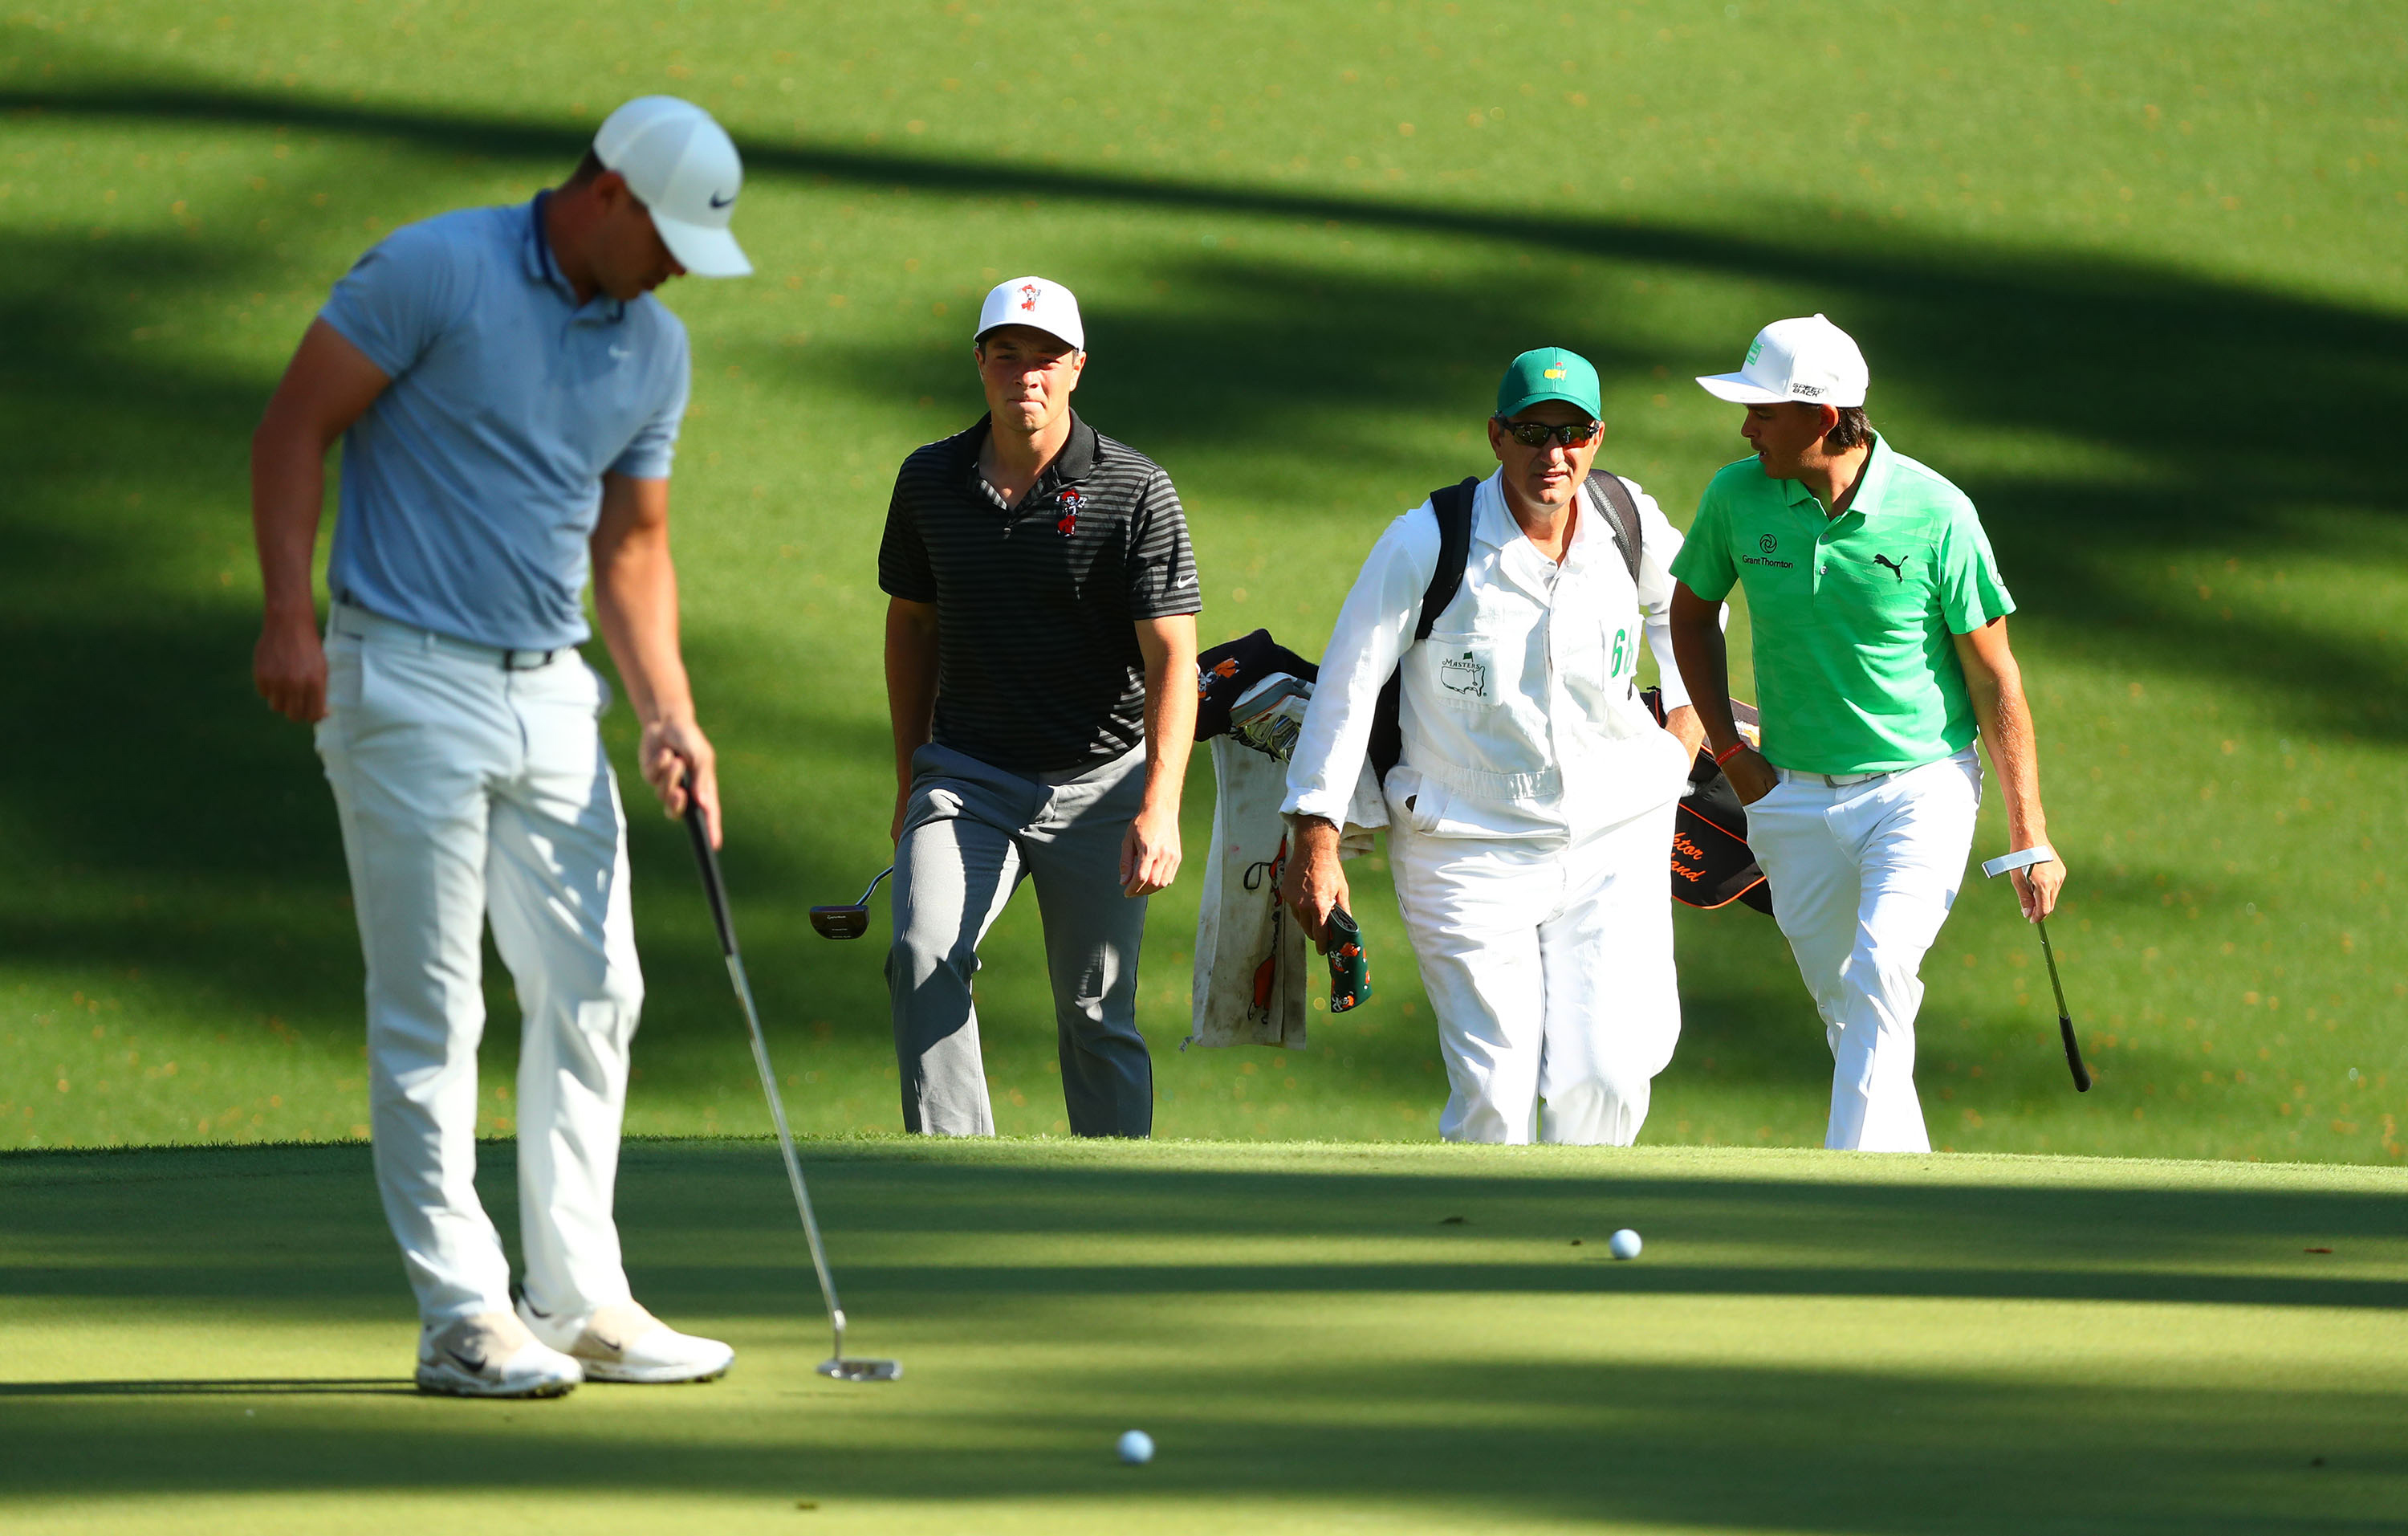 PGA: Masters Tournament - Practice Round, Rickie Fowler, Viktor Hovland